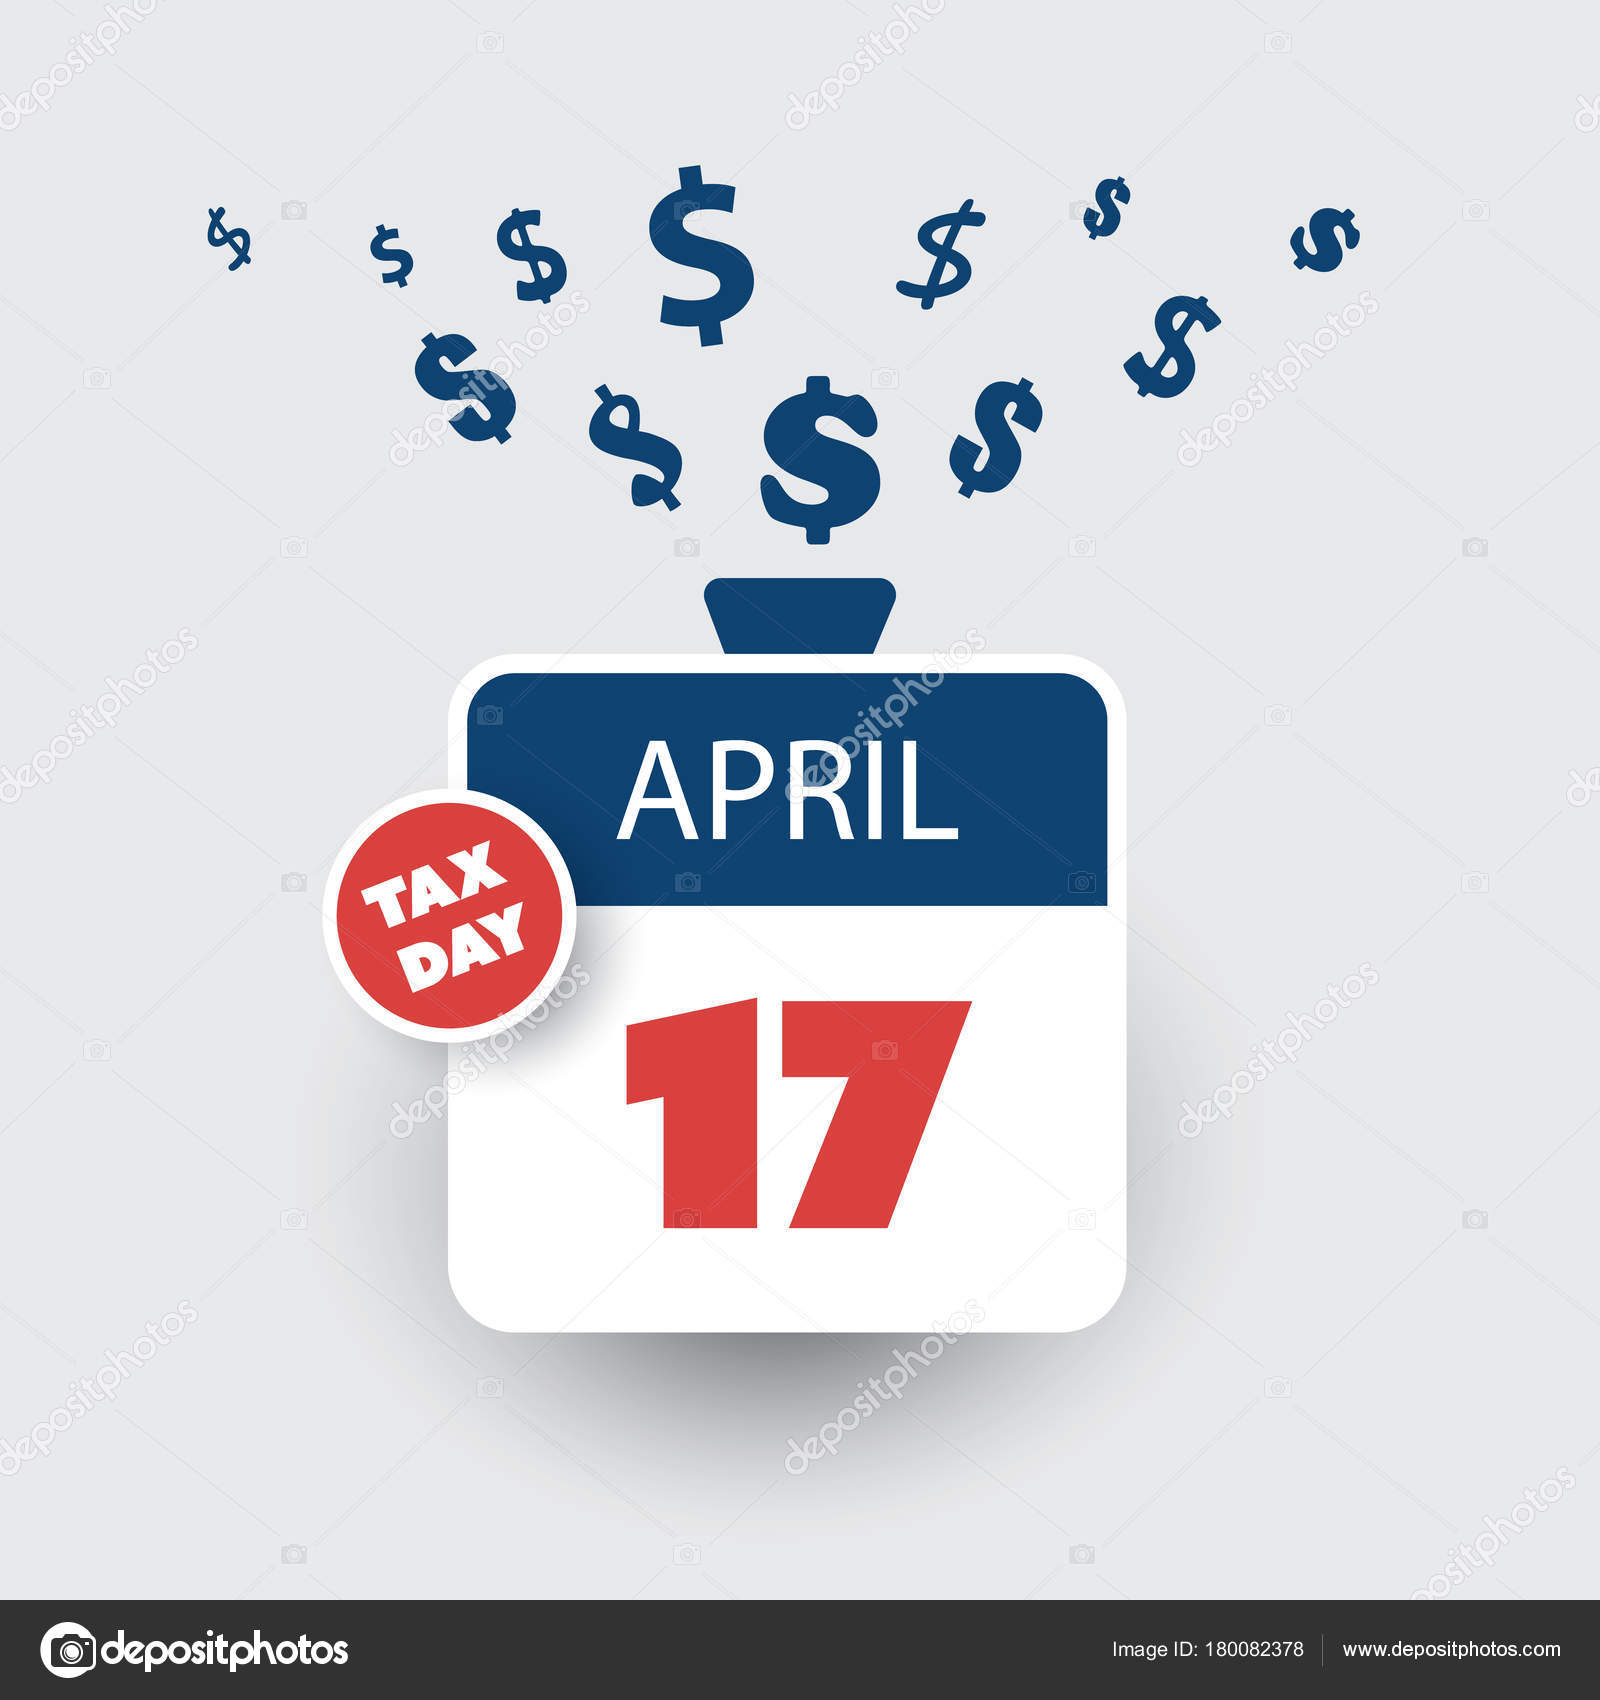 Tax Day Reminder Concept - Calendar Design Template - USA 